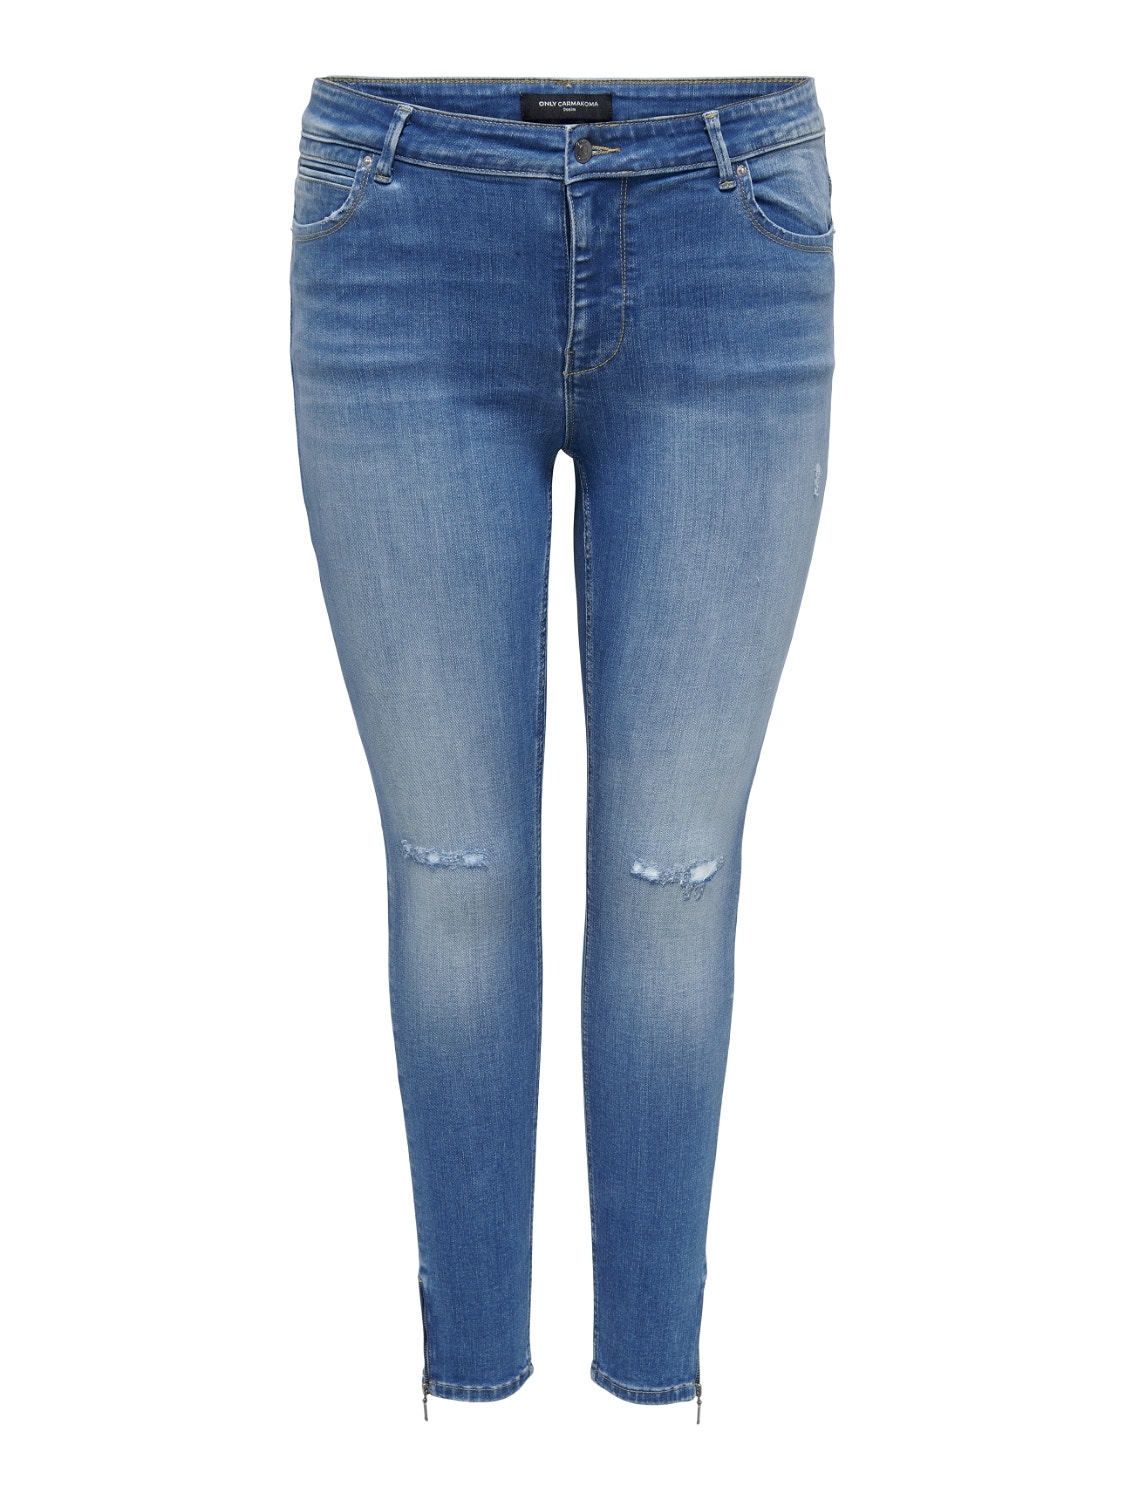 ONLY Jeans Skinny Fit Taille moyenne Ourlé destroy Curve -Medium Blue Denim - 15259826